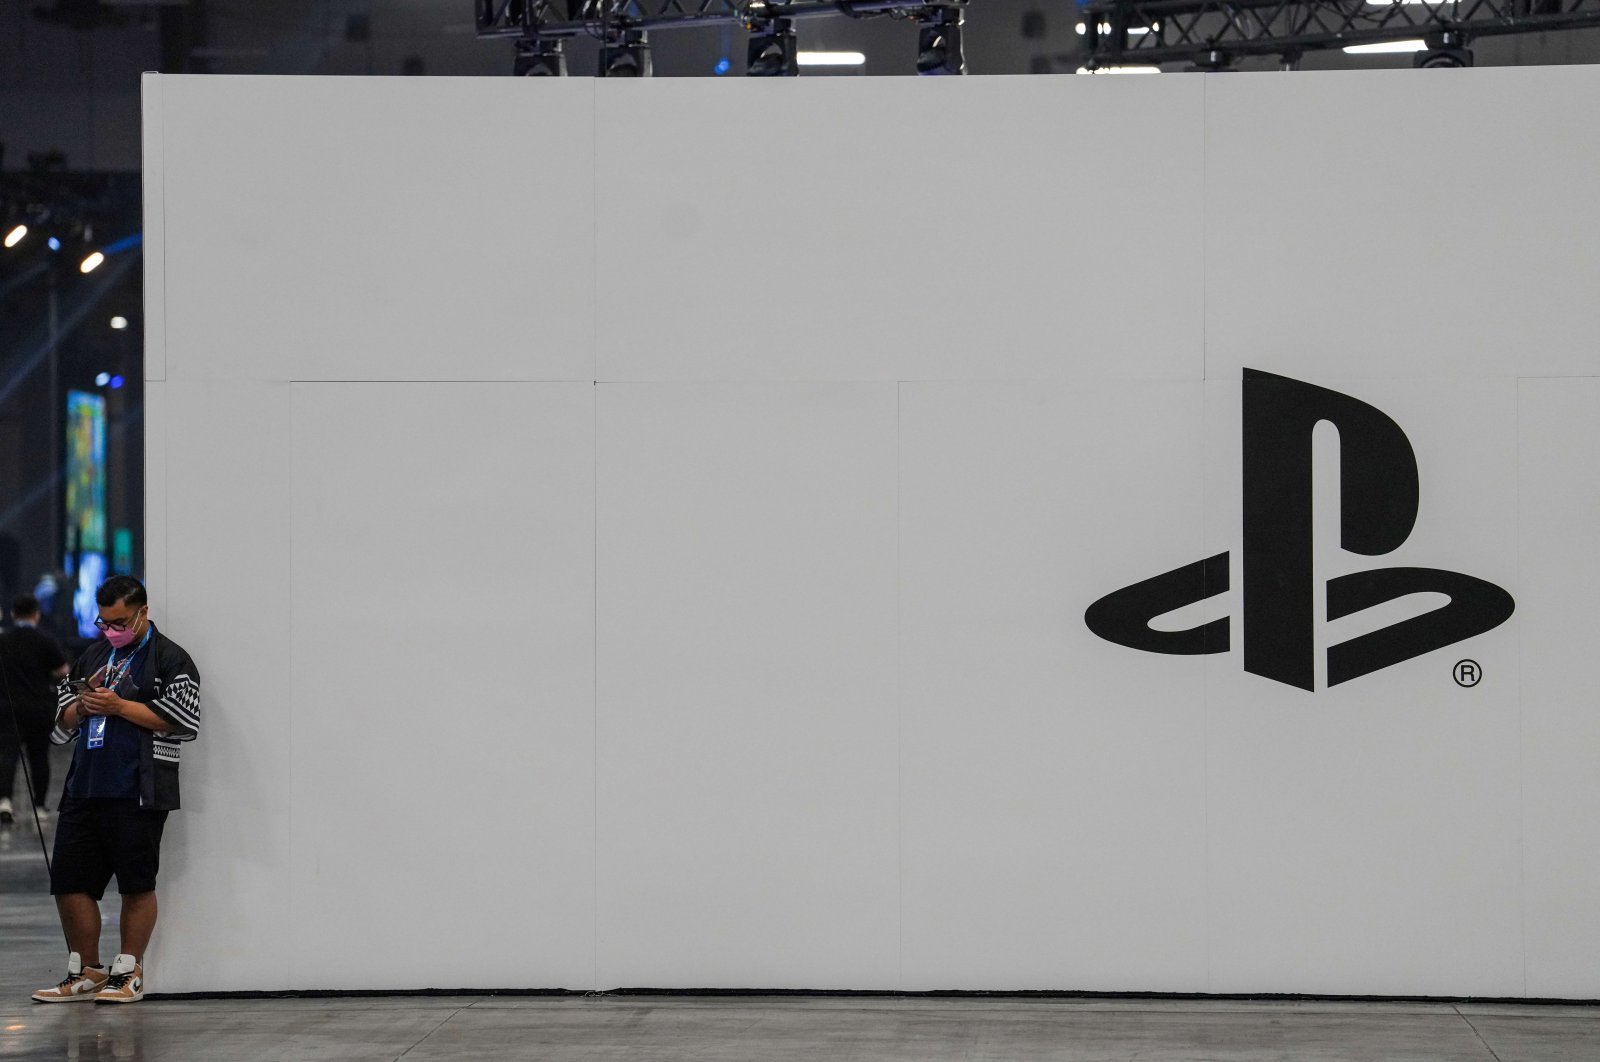 ‘Merampok pelanggan’: PlayStation digugat karena harga game